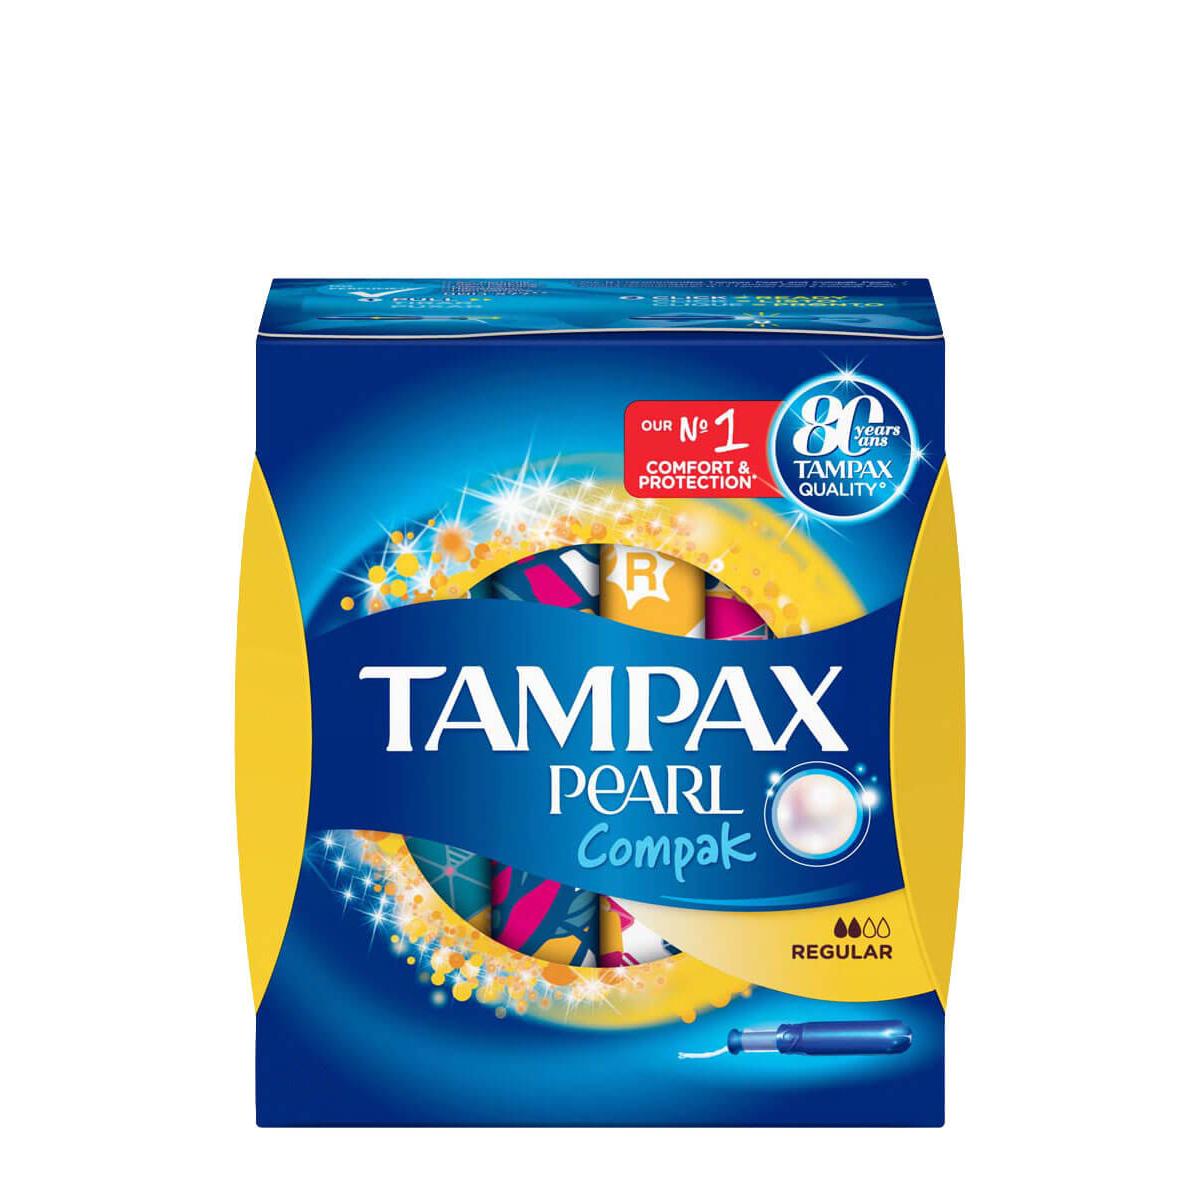 Tampax - Tampax compak pearl regular 16 unidades